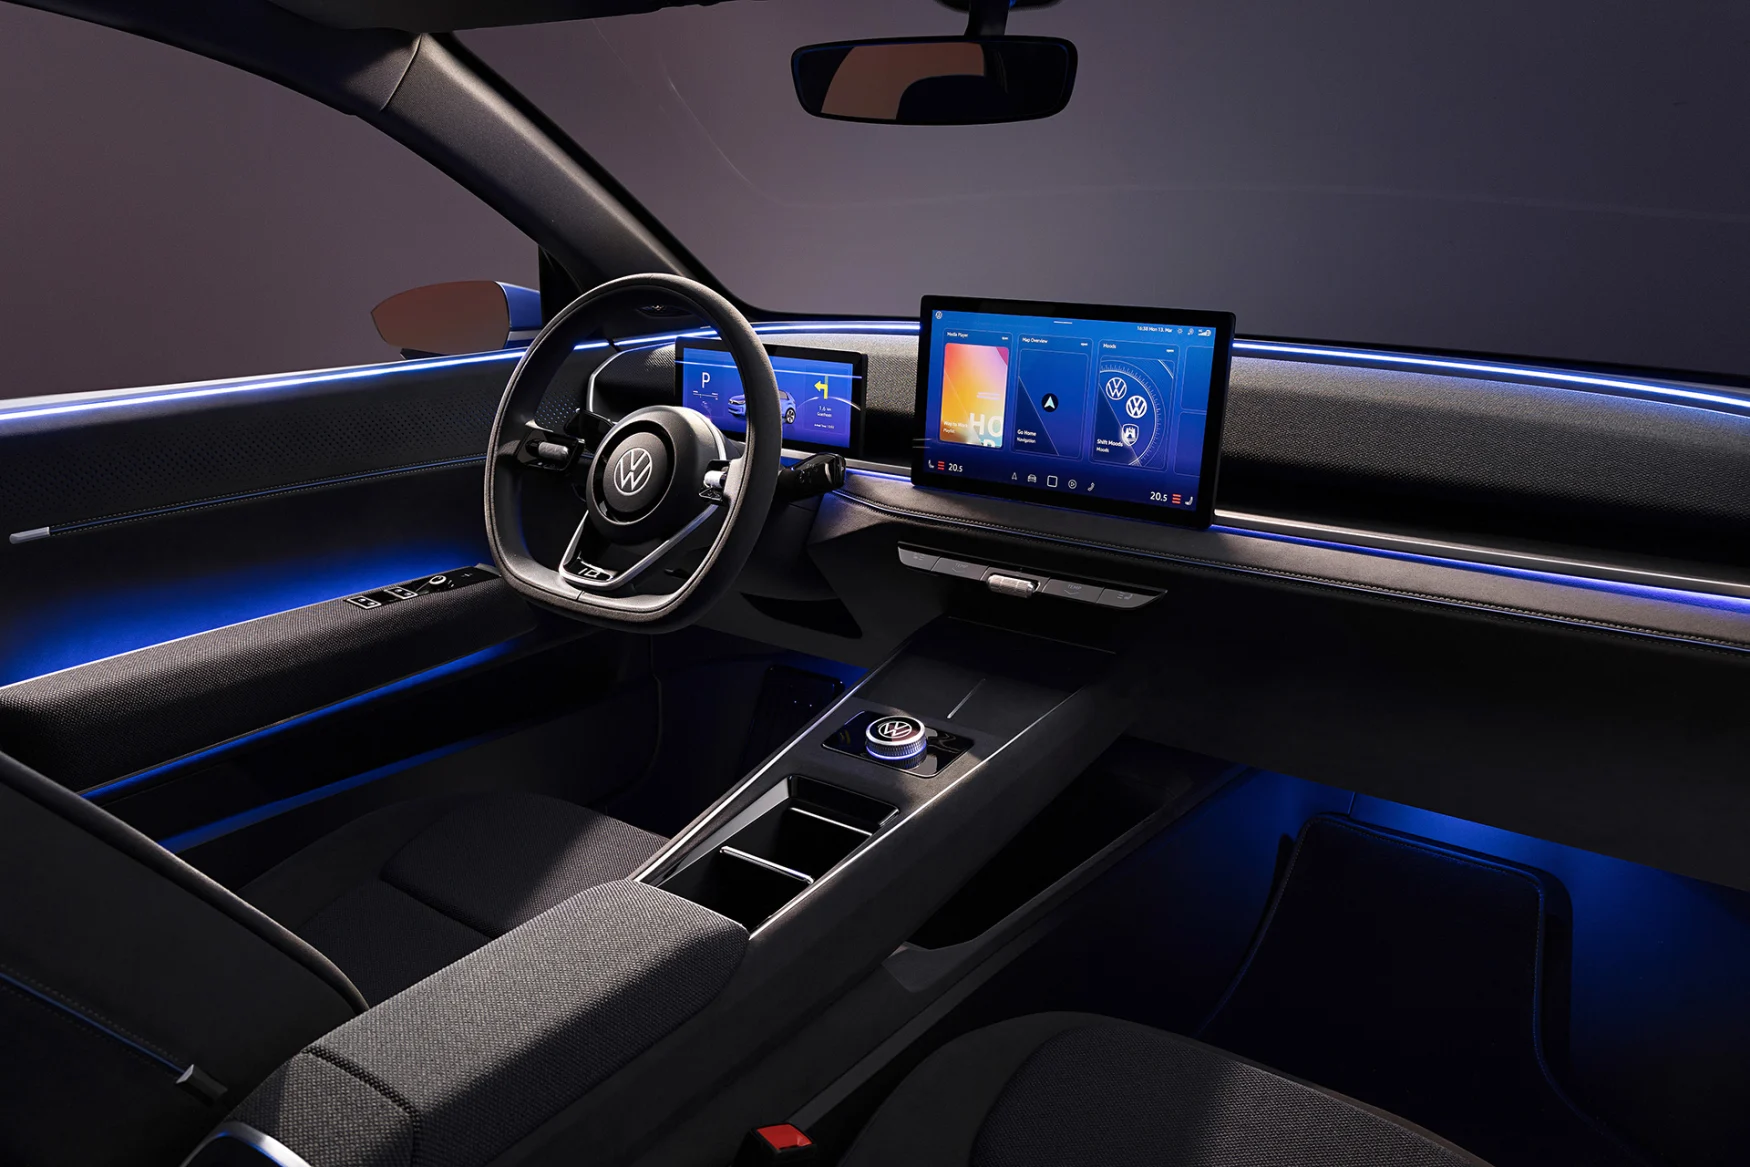 Volkswagen ID. 2all concept EV interior